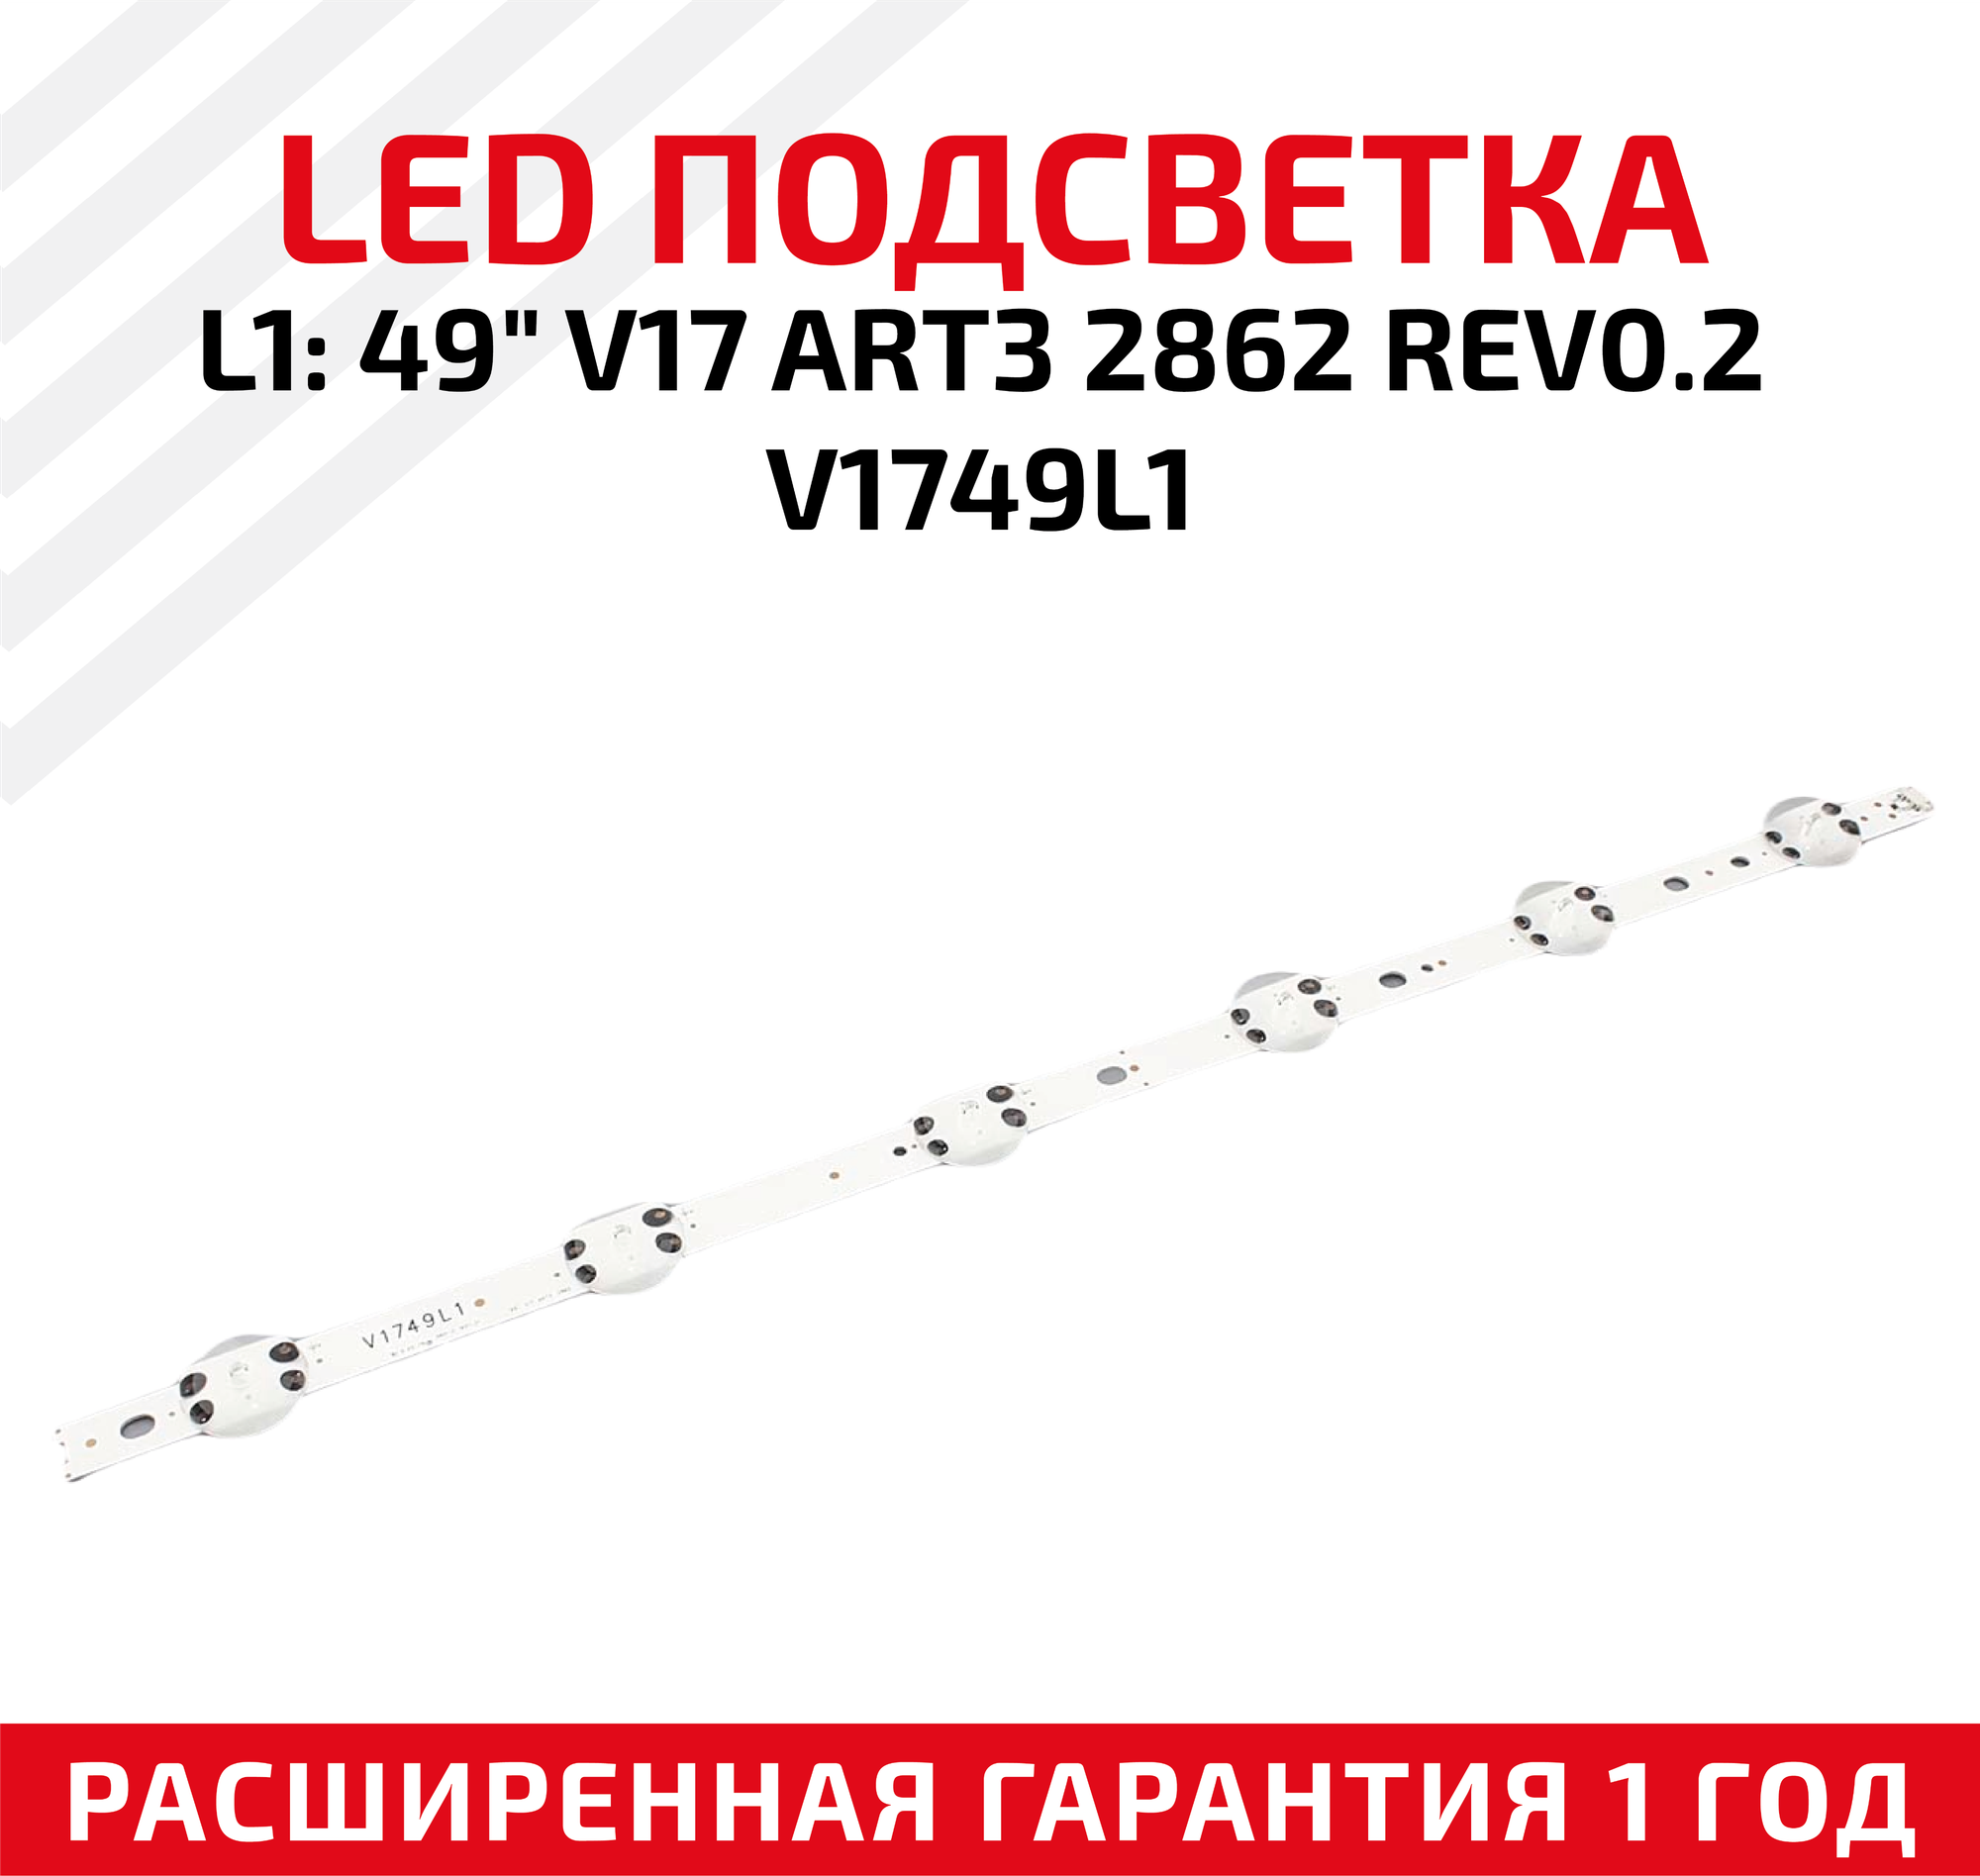 LED подсветка (светодиодная планка) для телевизора L1: 49" V17 ART3 2862 REV0.2